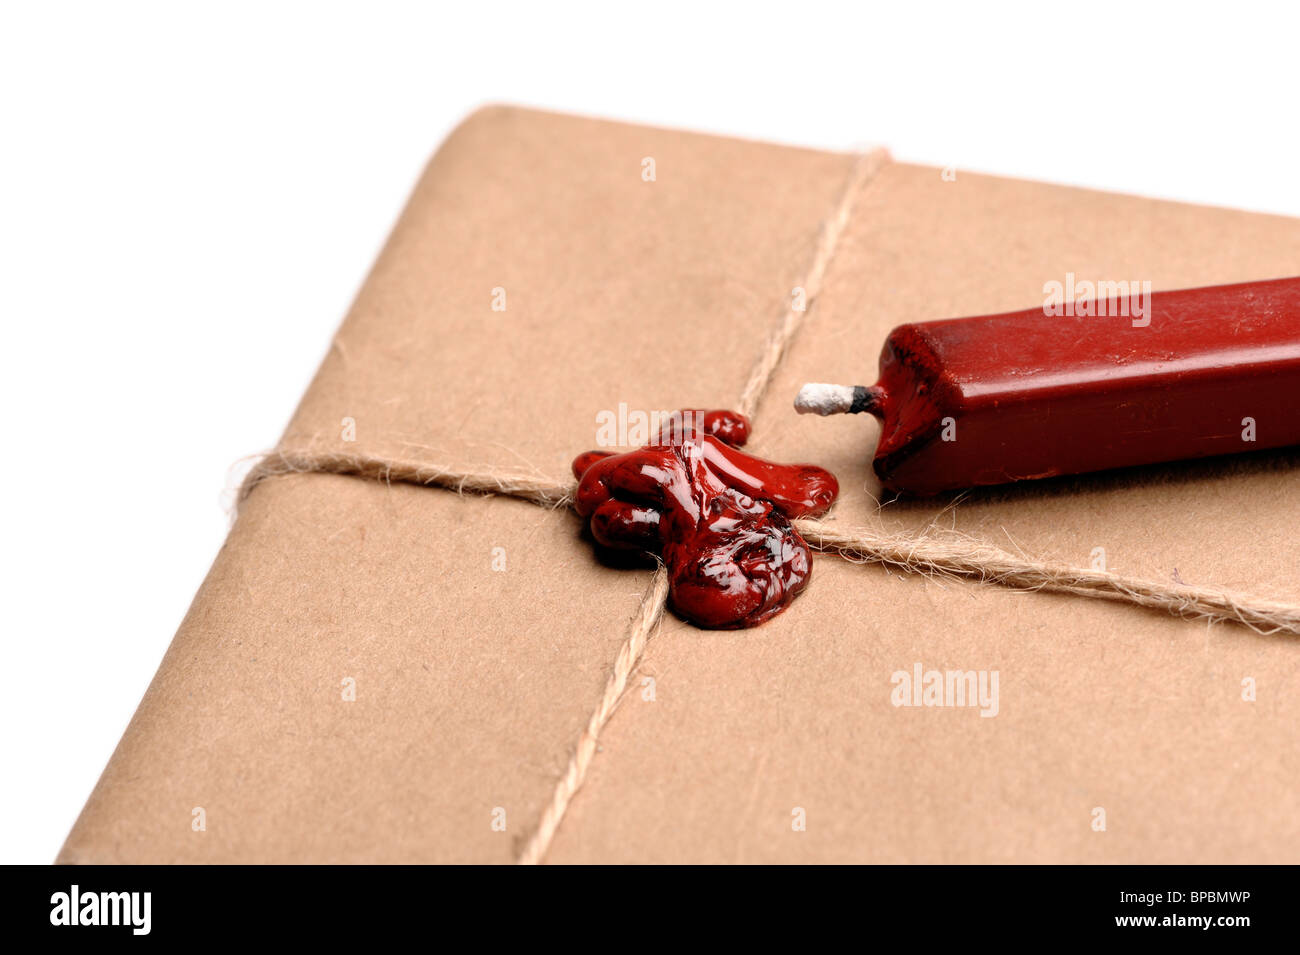 Envelope and sealing wax Stock Photo